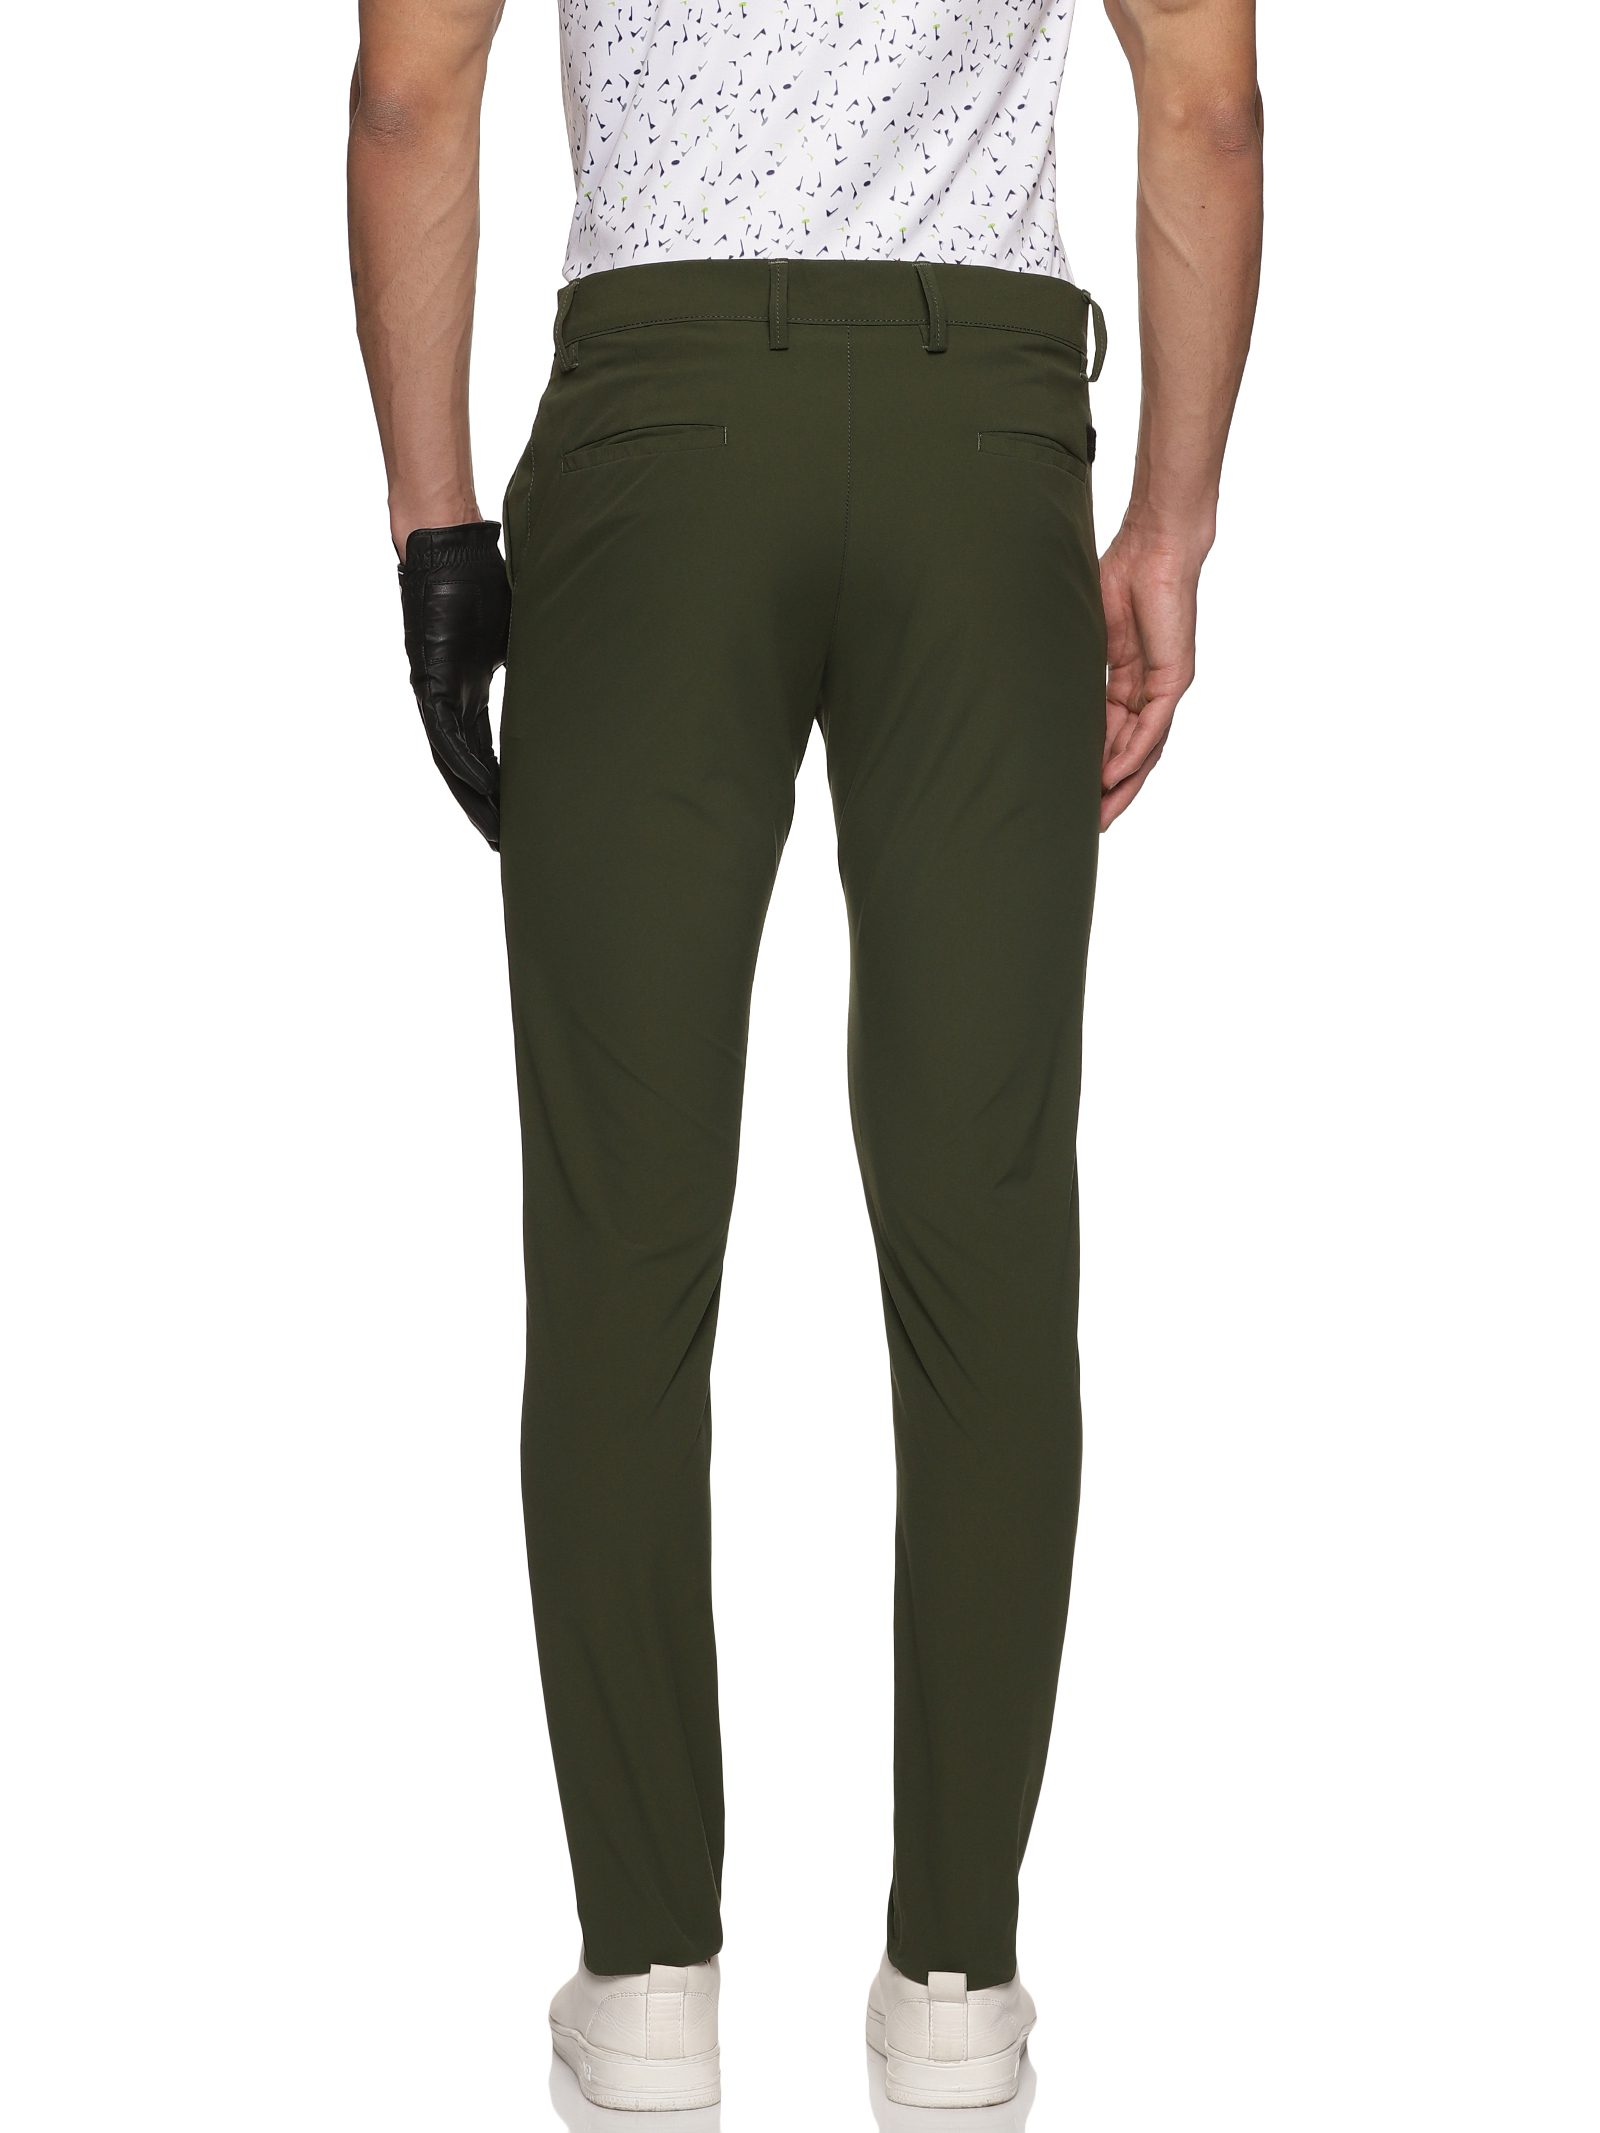 5 Ways to Wear Olive Pants | Olive pants, Olive green pants outfit, Olive  green pants